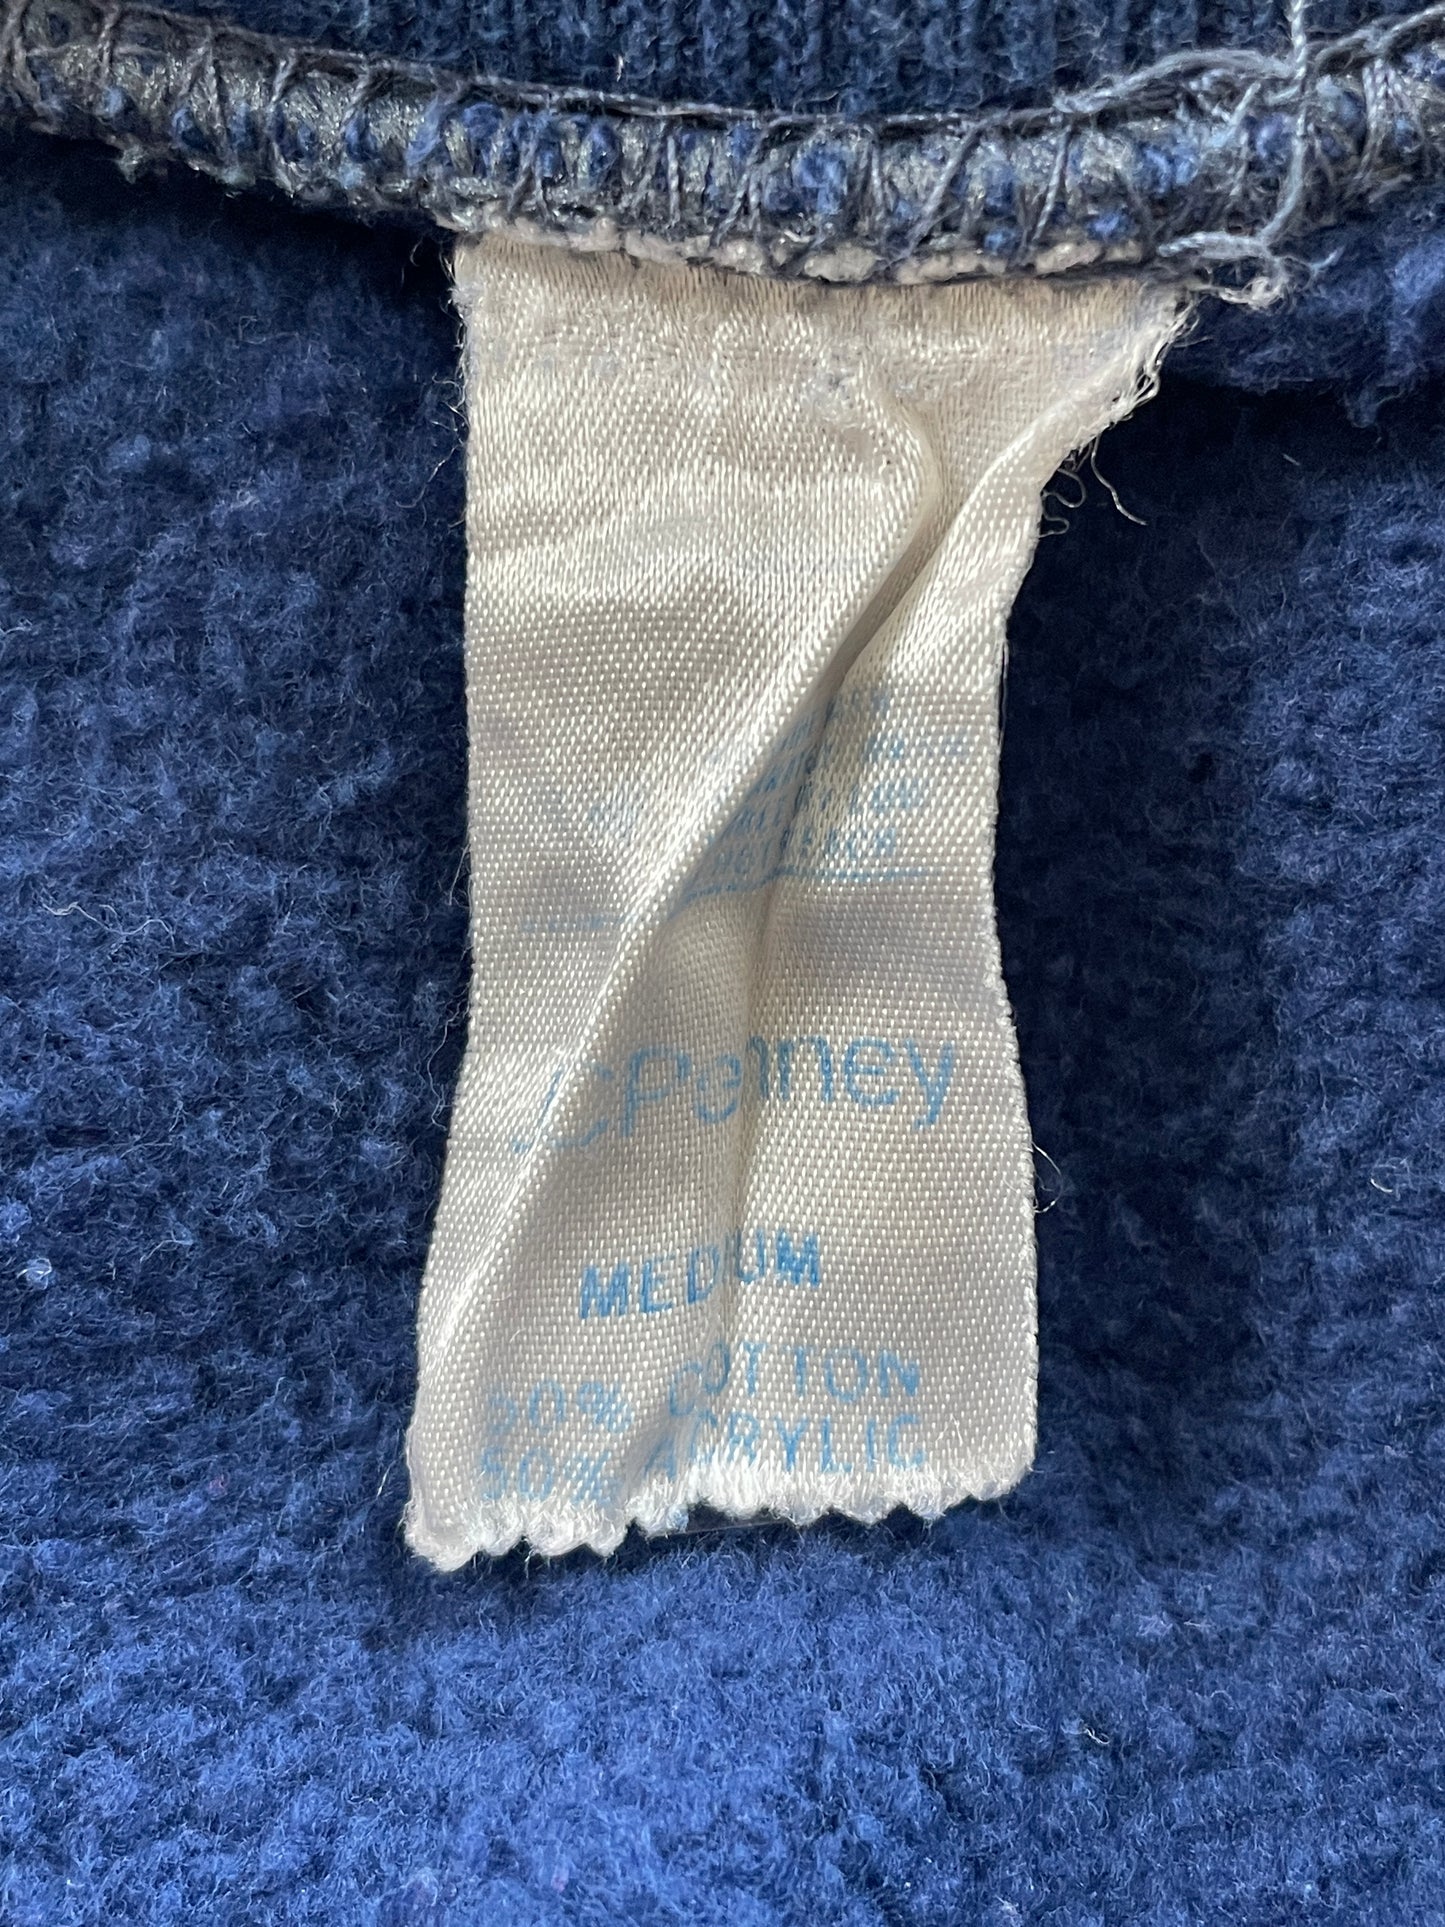 70s/80s Blank Navy Blue Sweatshirt